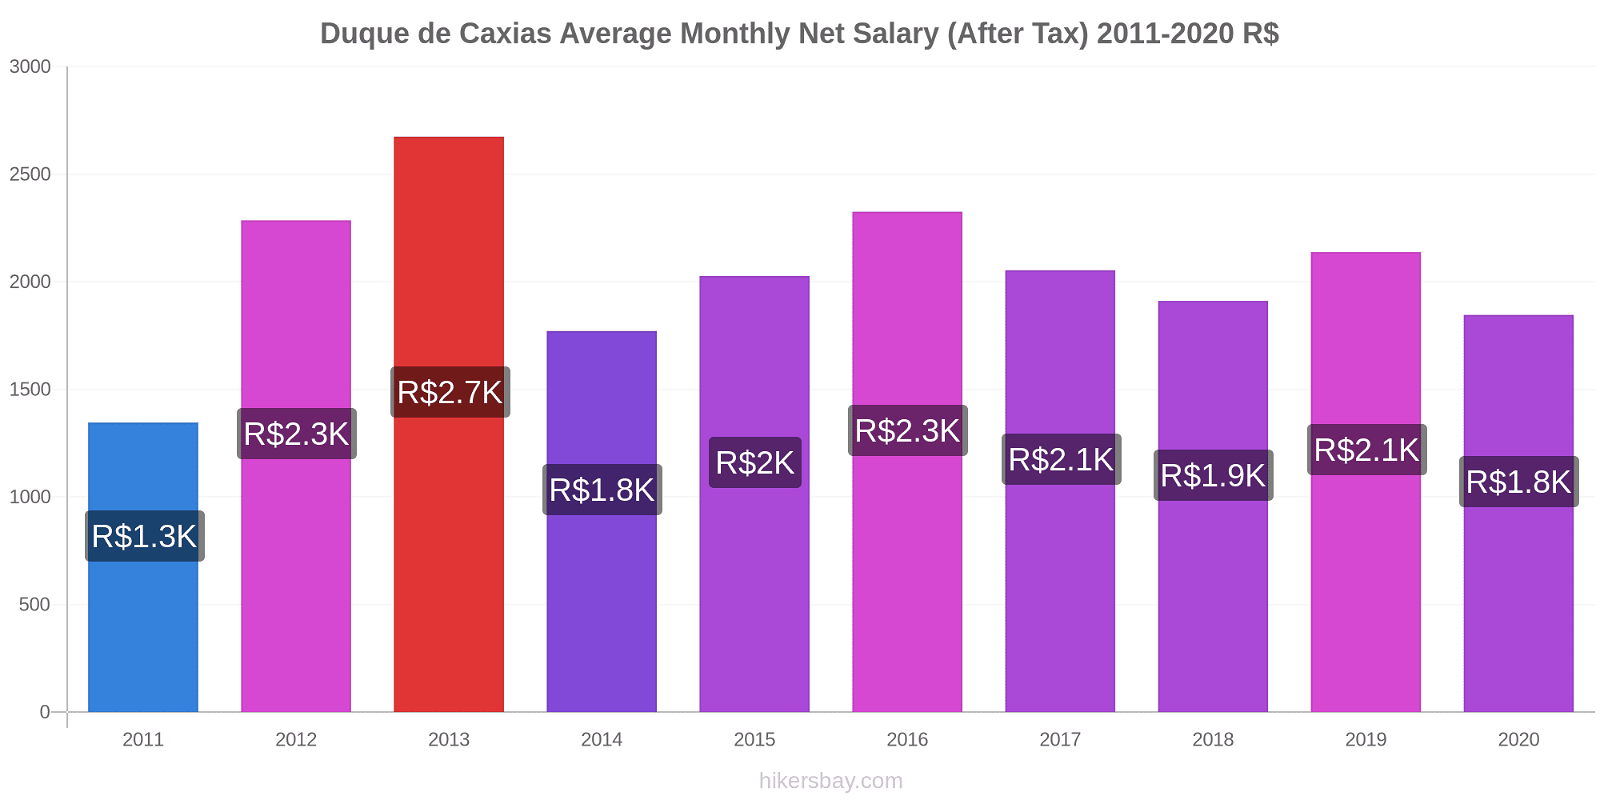 Duque de Caxias price changes Average Monthly Net Salary (After Tax) hikersbay.com